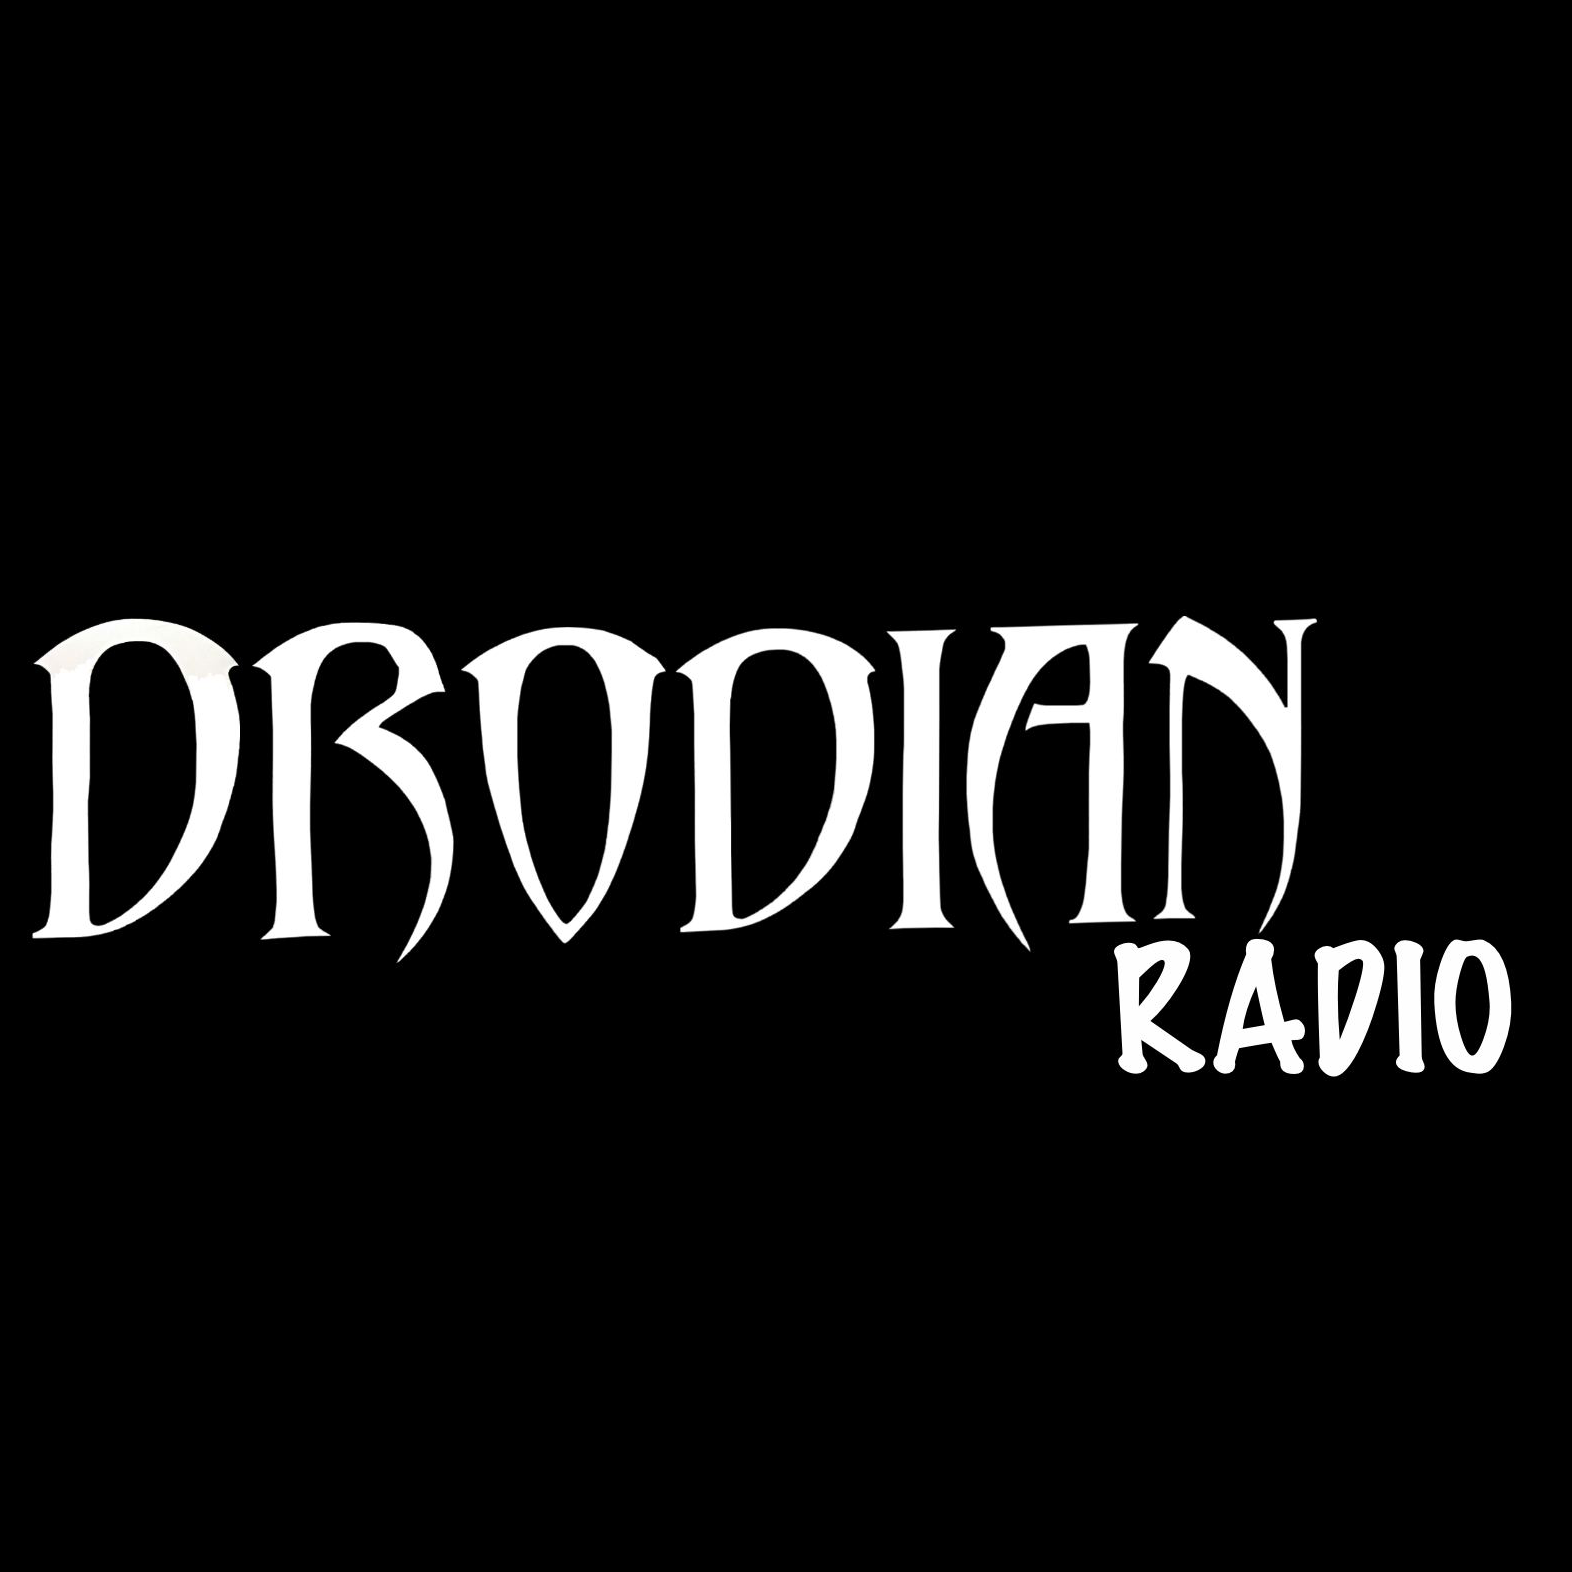 DRODIAN RADIO ALL DAY